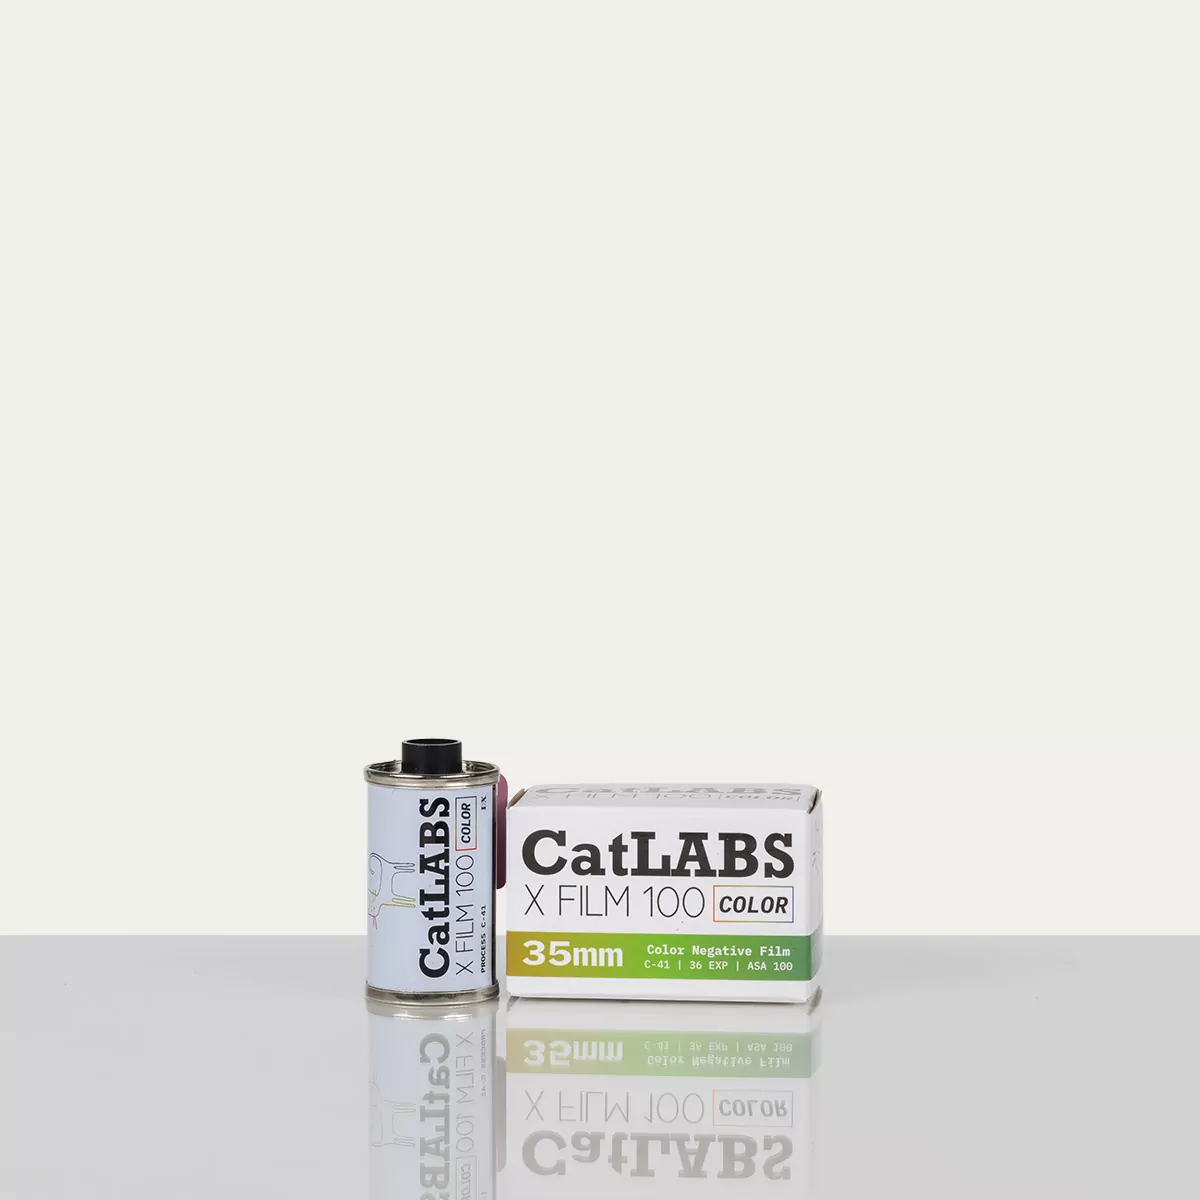 CatLABS X FILM 100 35mm